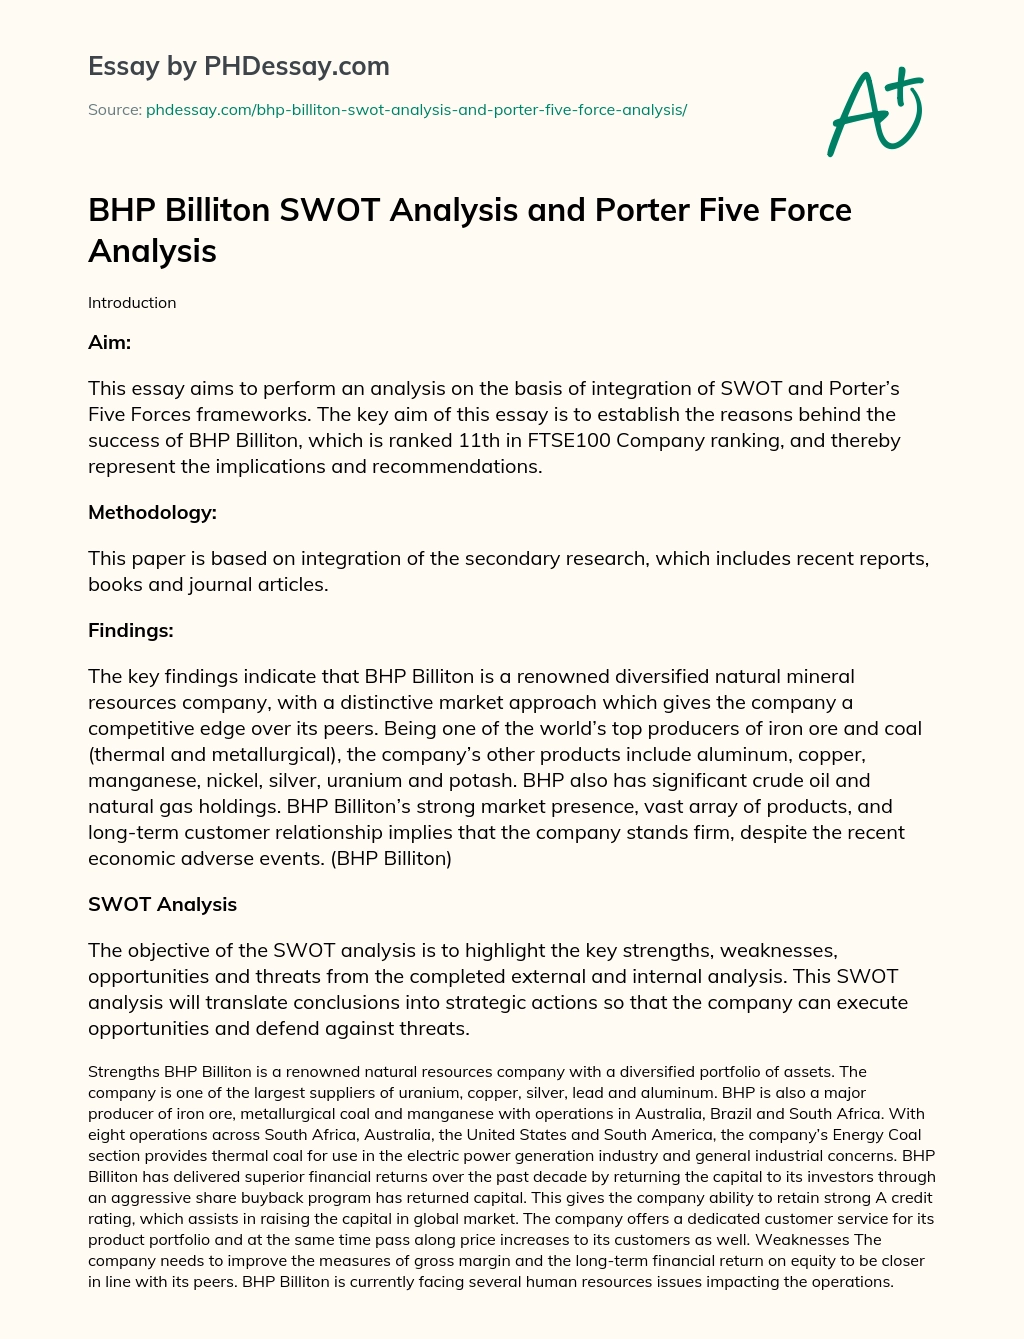 BHP Billiton SWOT Analysis and Porter Five Force Analysis essay